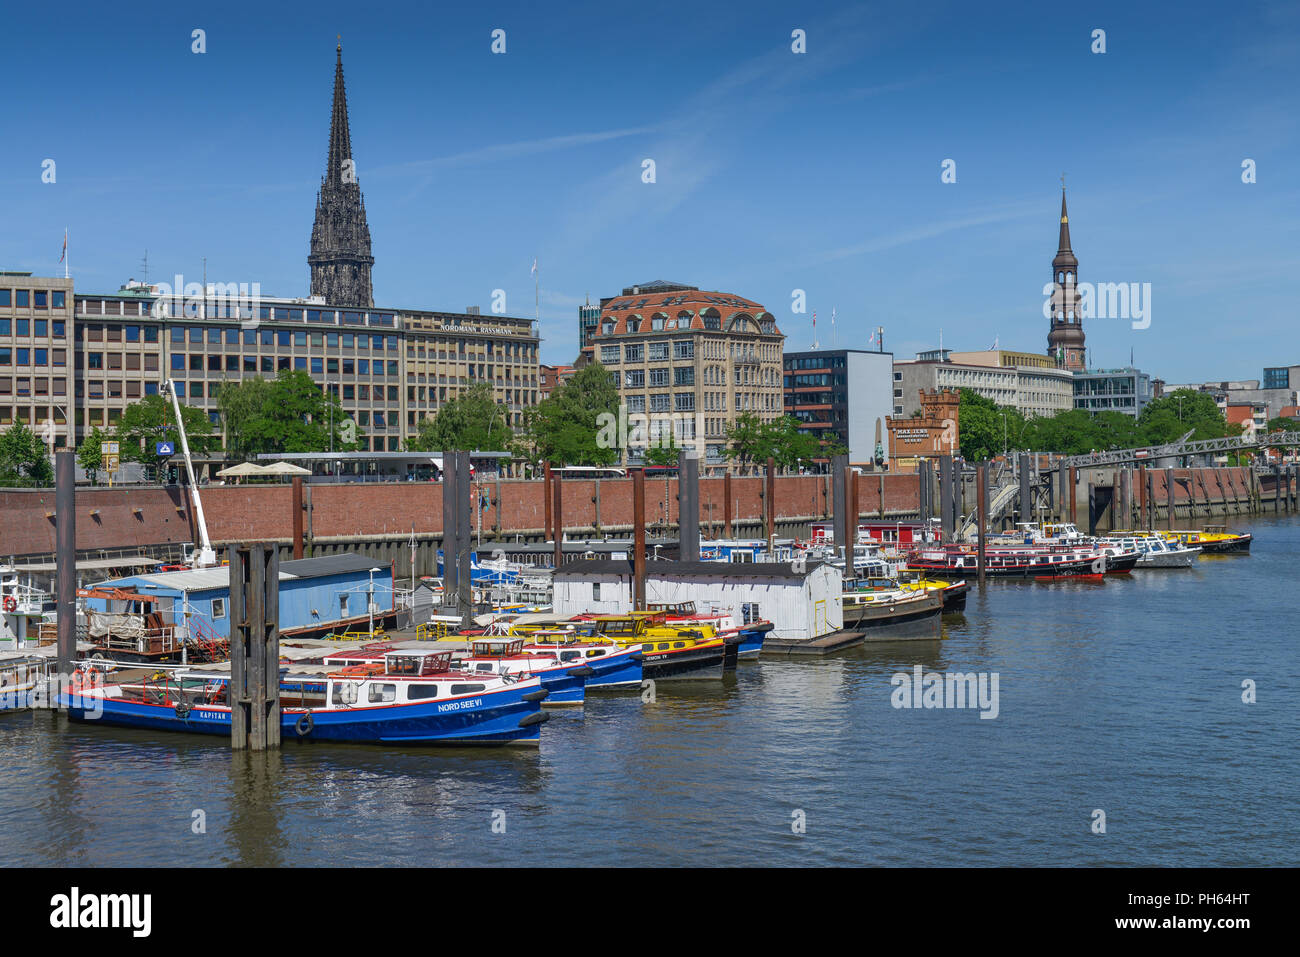 Barkassen, Binnenhafen, Hohe Bruecke, Hamburg, Deutschland Stock Photo